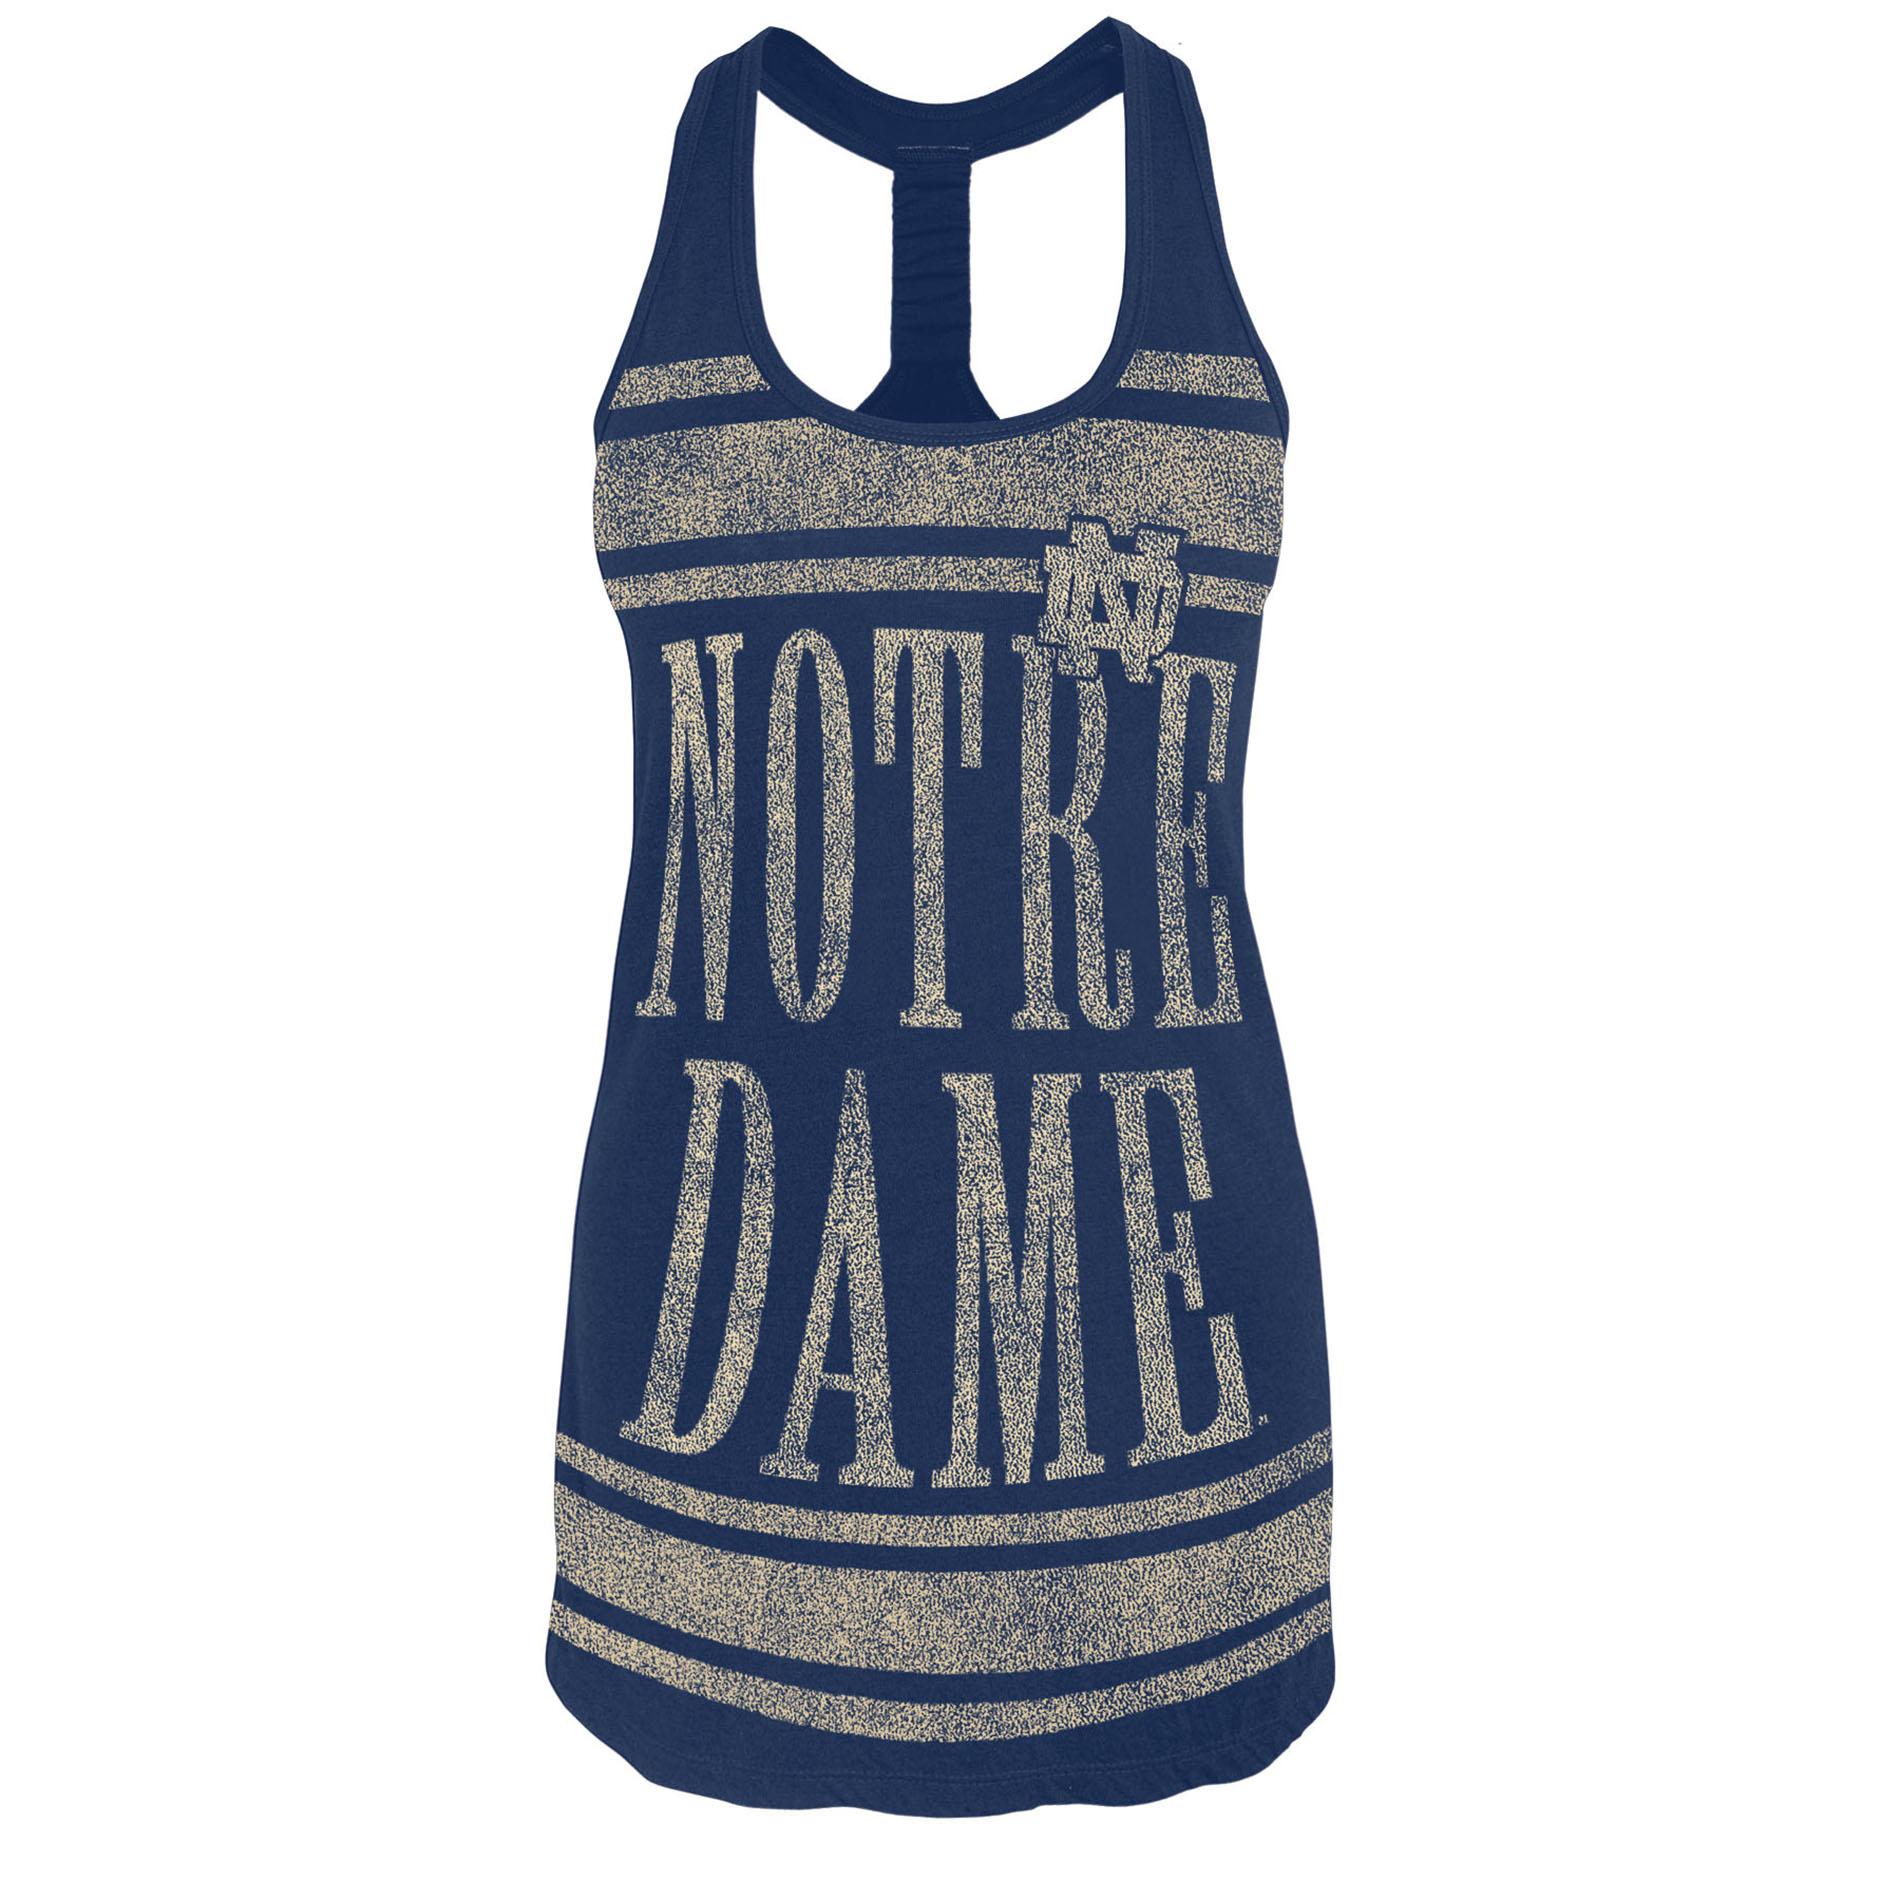 NCAA Women's Sleeveless Top - Notre Dame